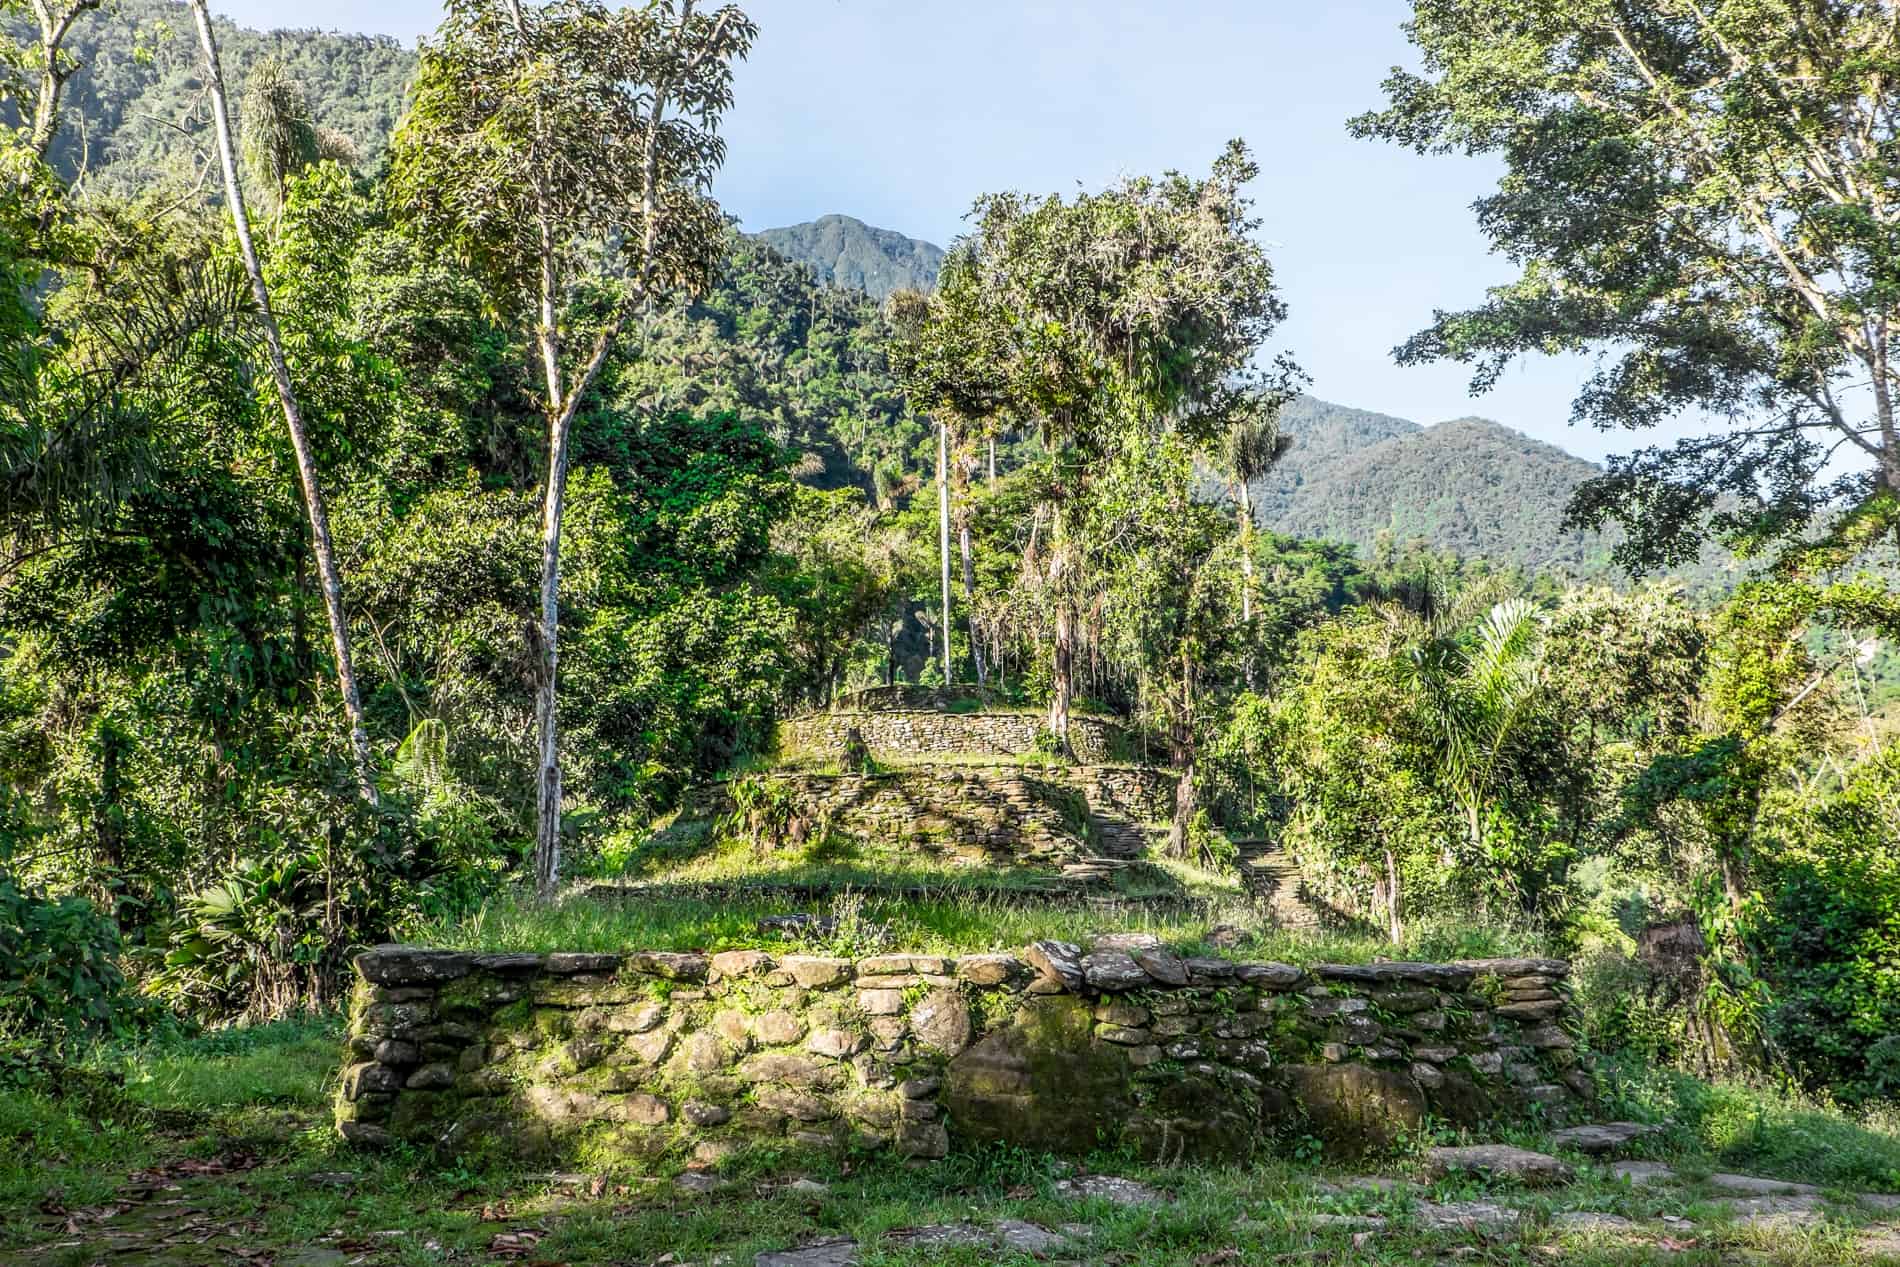 Dense jungle encased stone terraces of The Lost City Ciudad Perdida in Colombia.